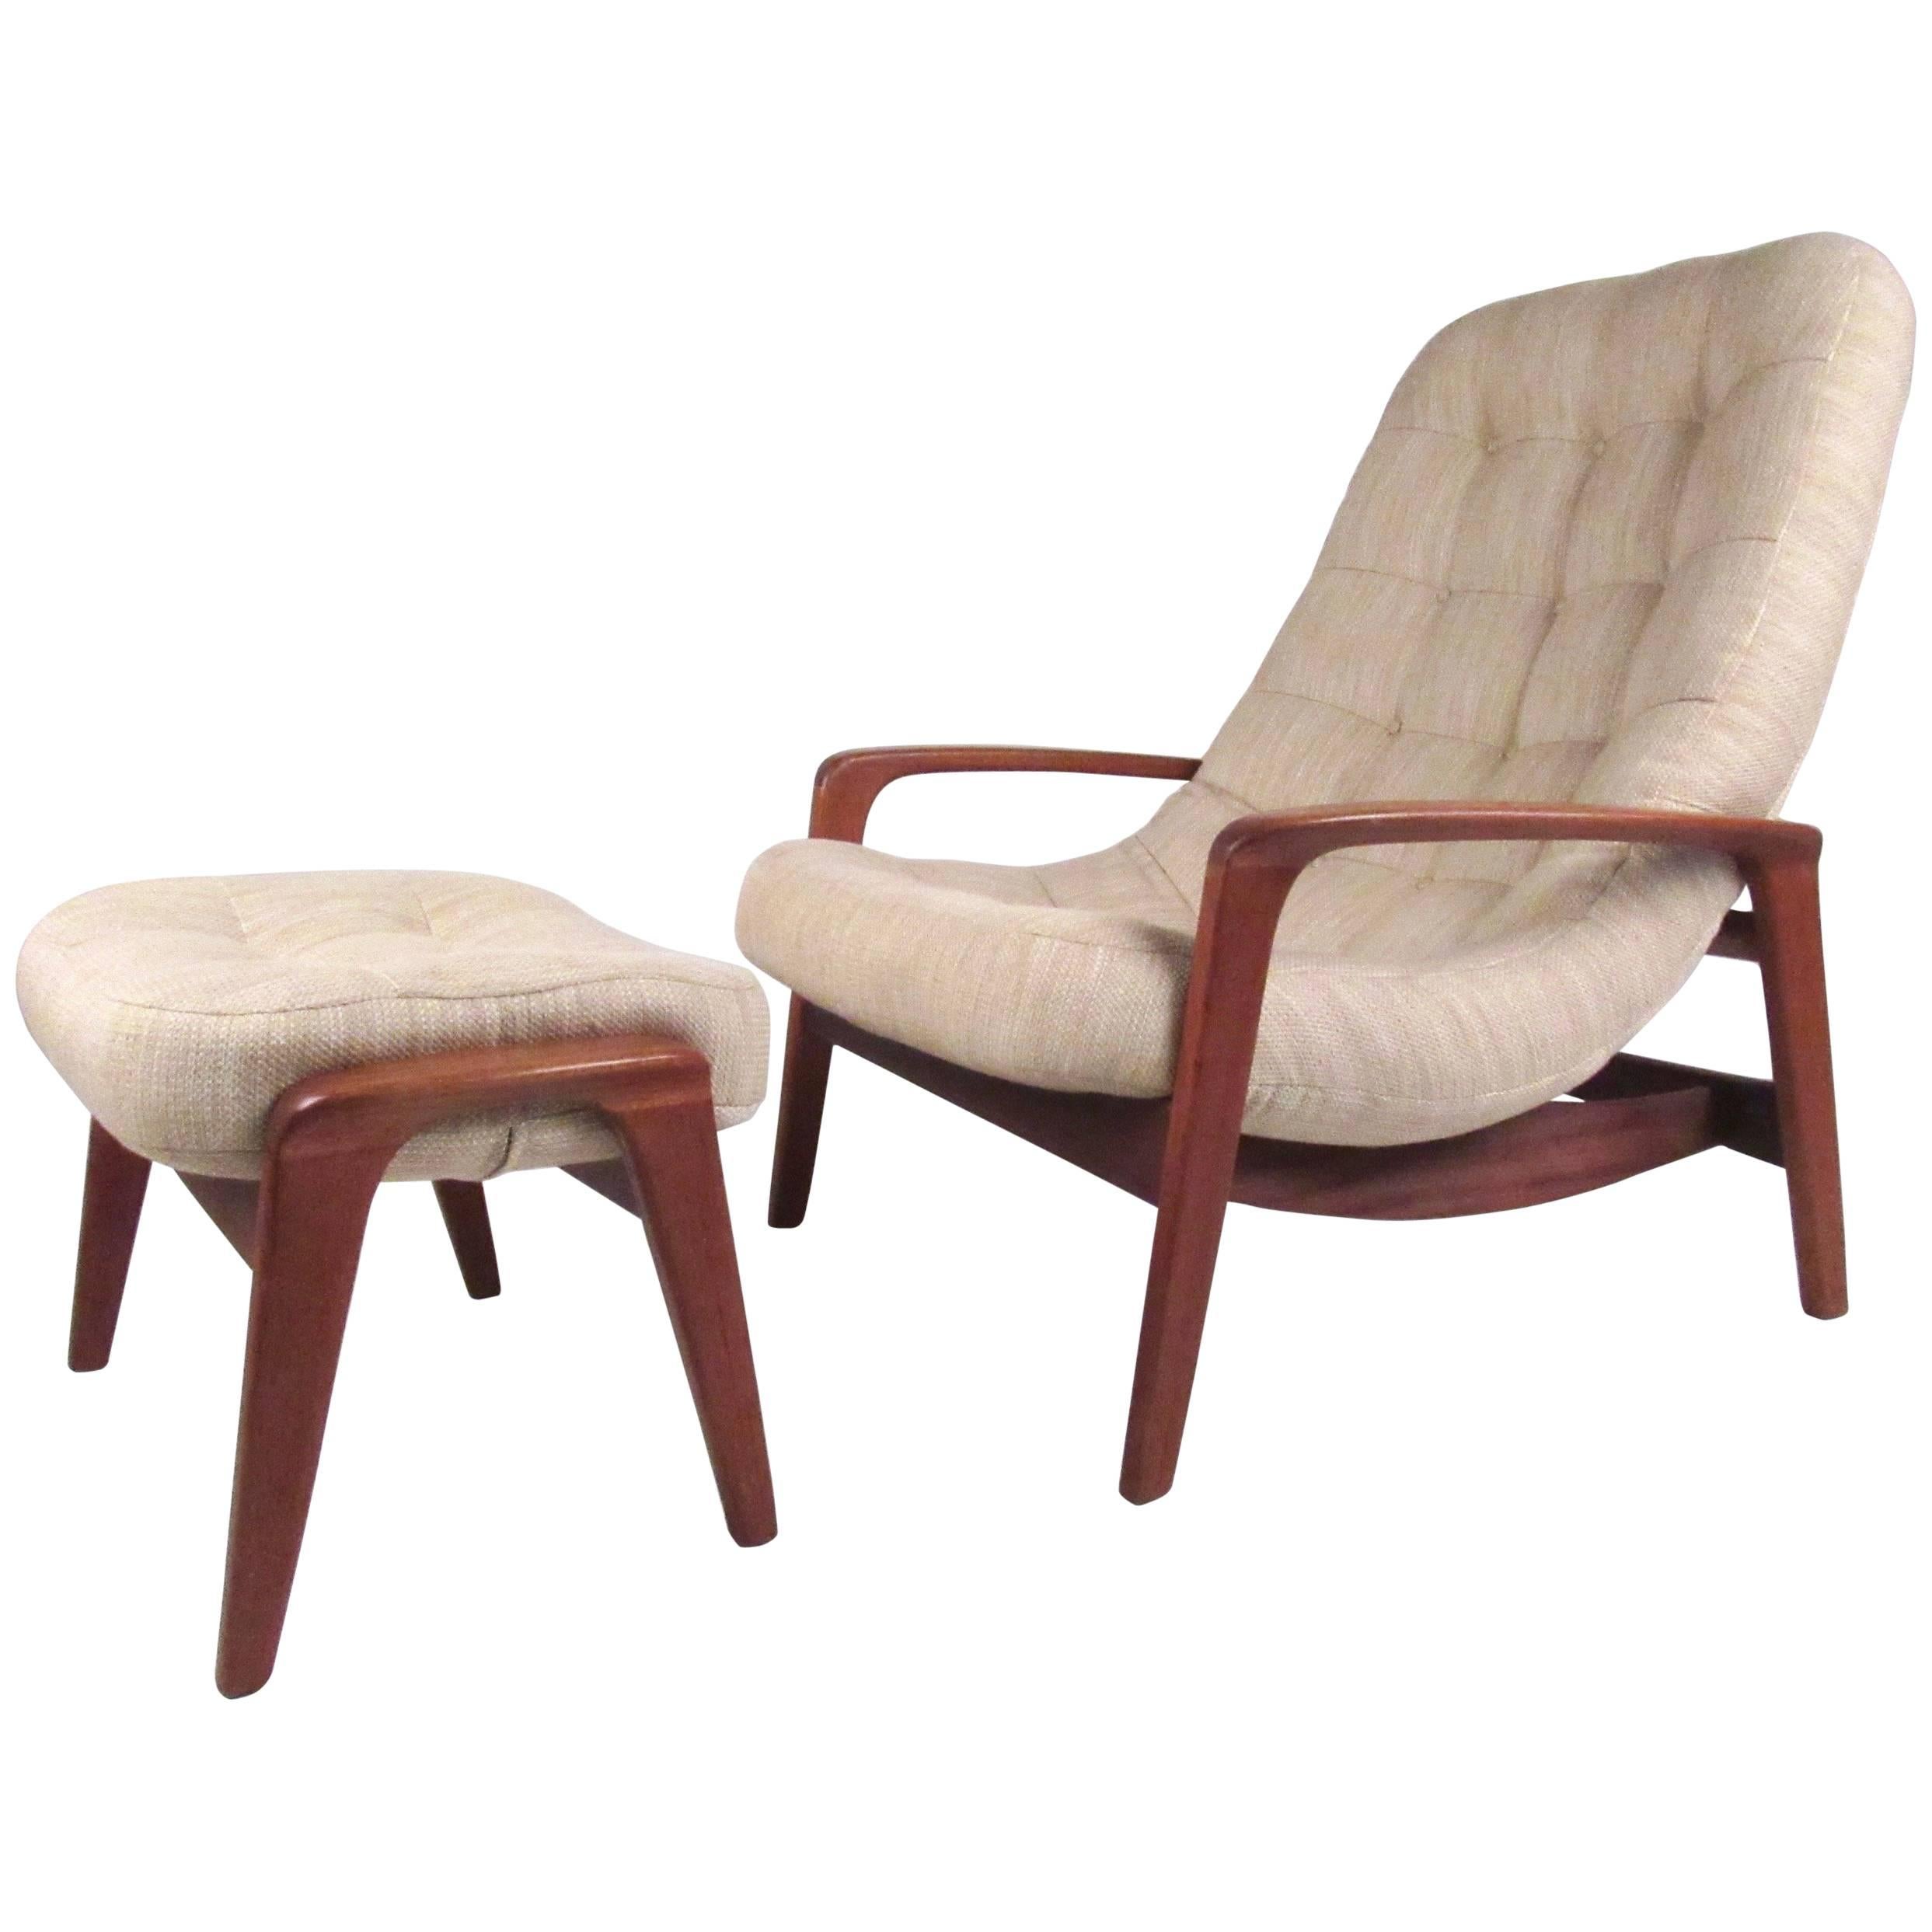 Vintage Modern Teak Frame Lounge Chair with Ottoman